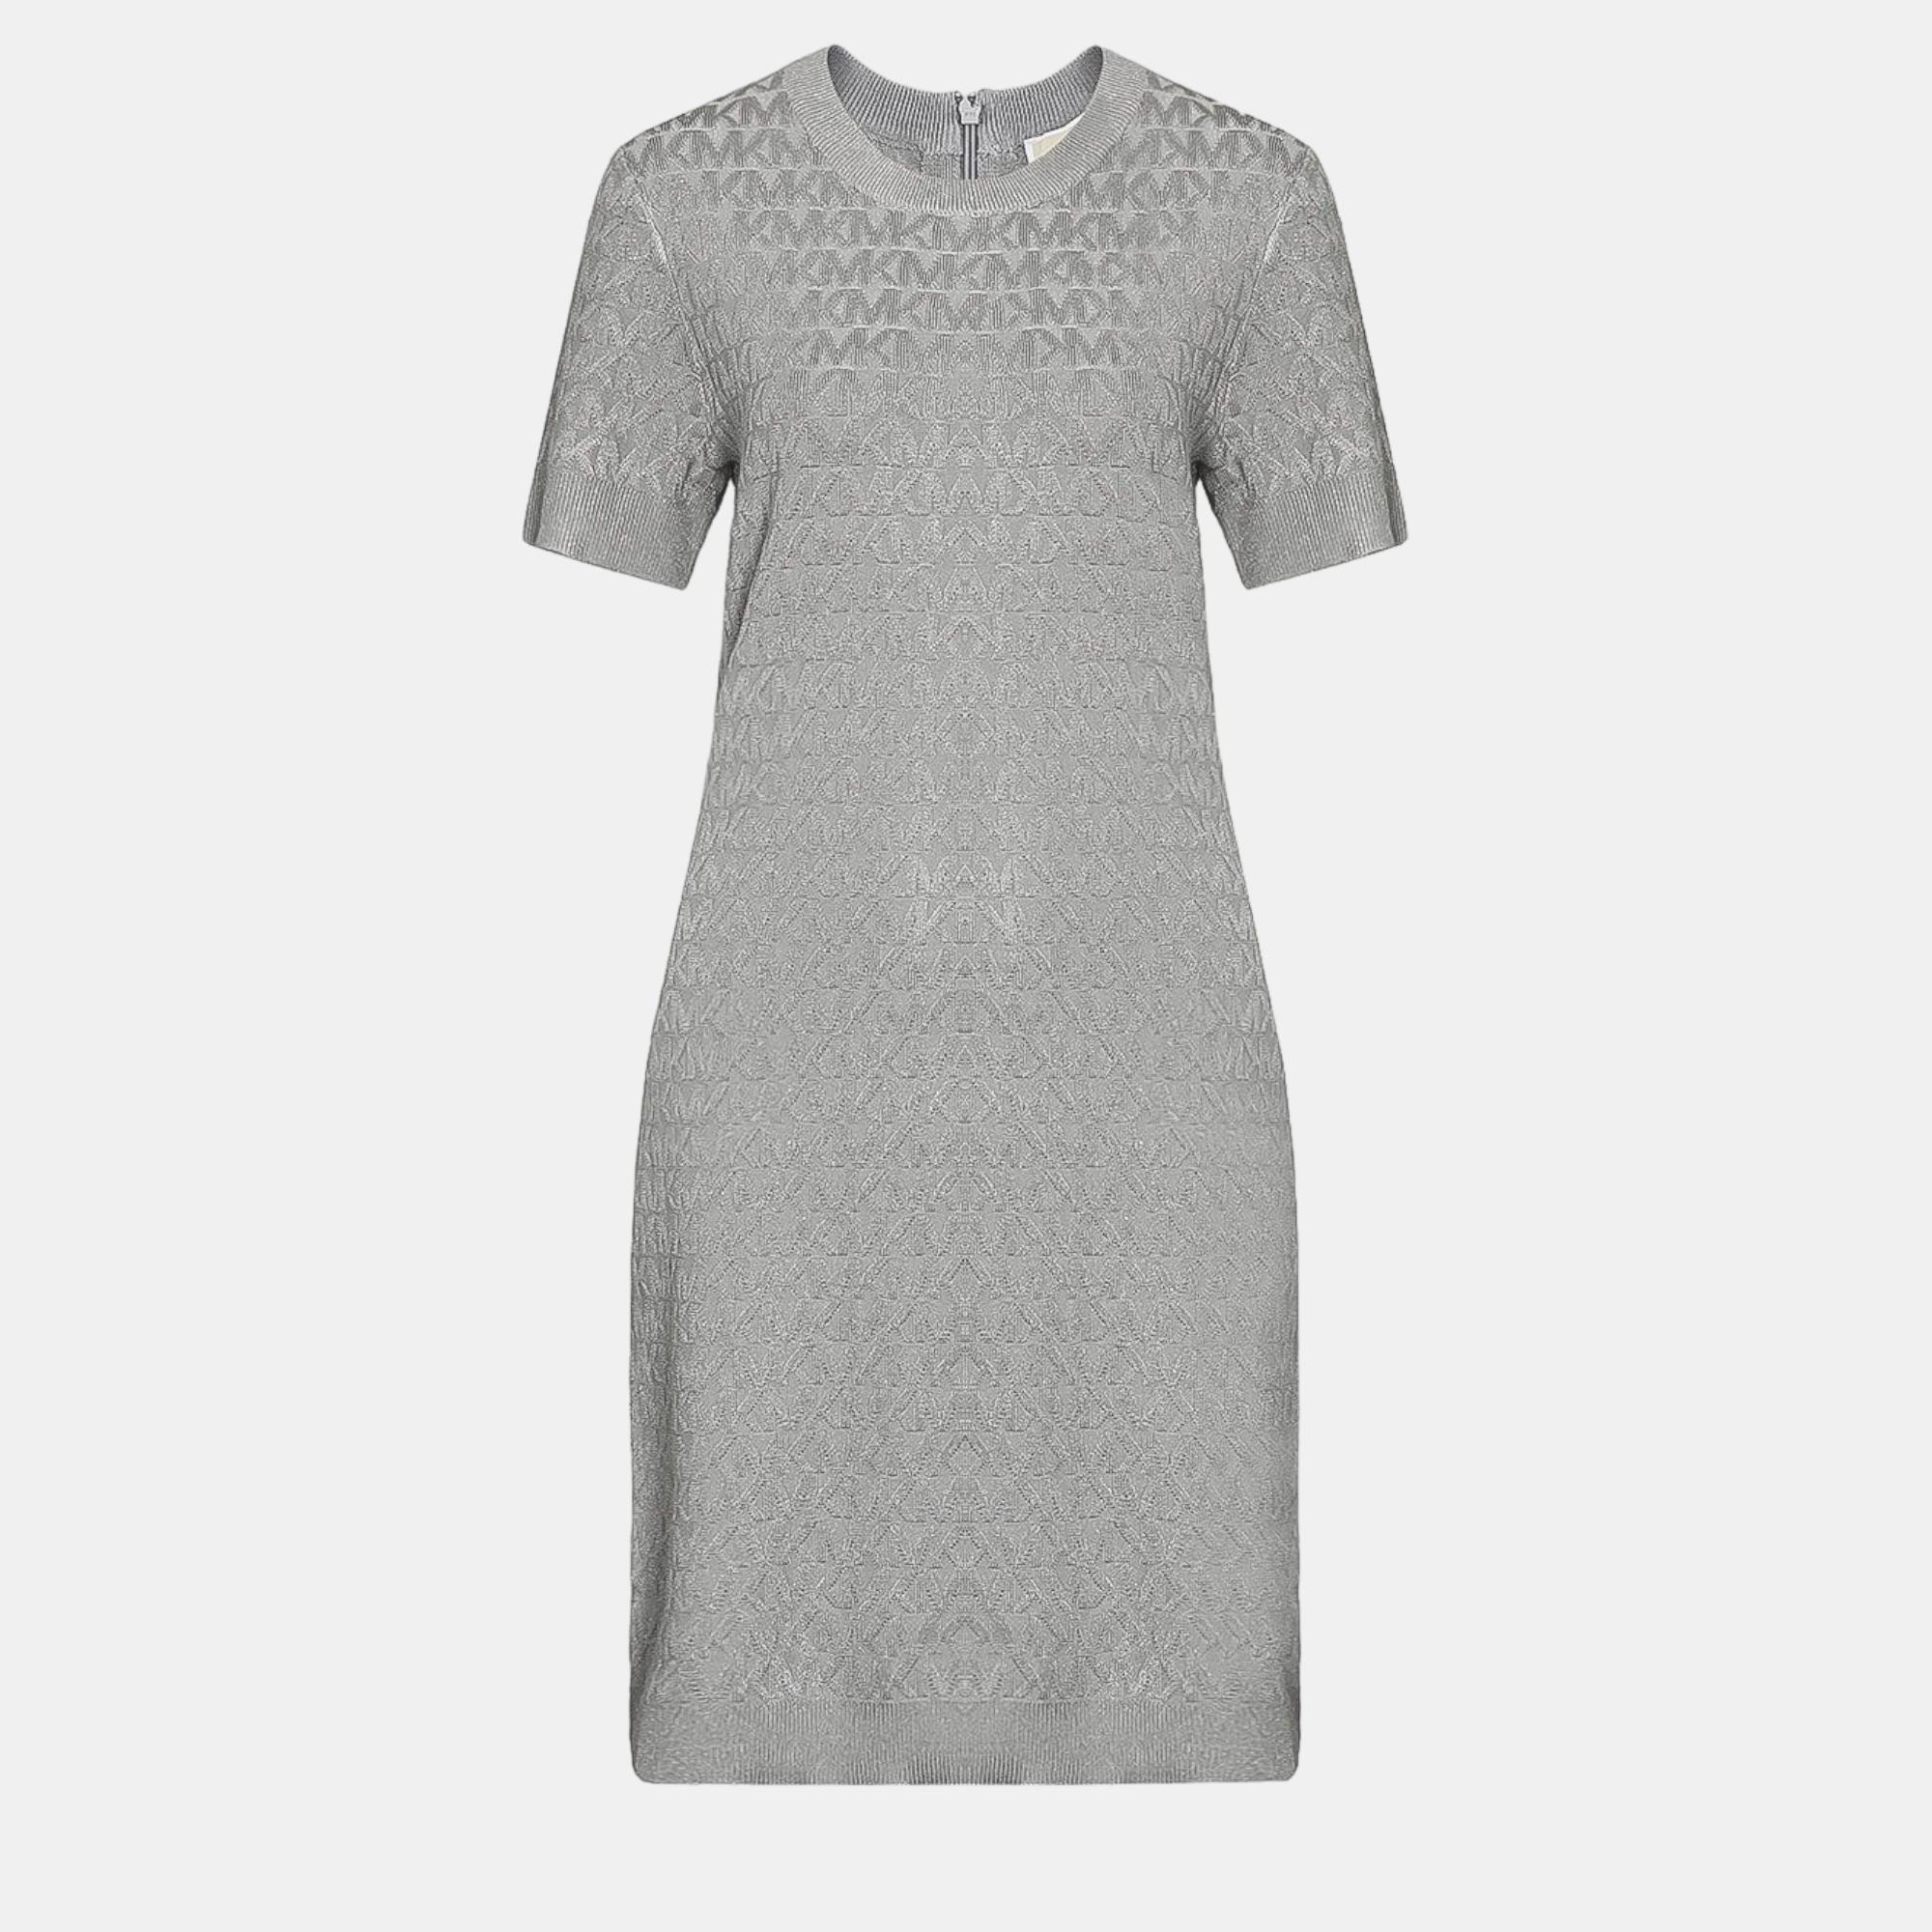 Michael kors grey metallic knit short dress s